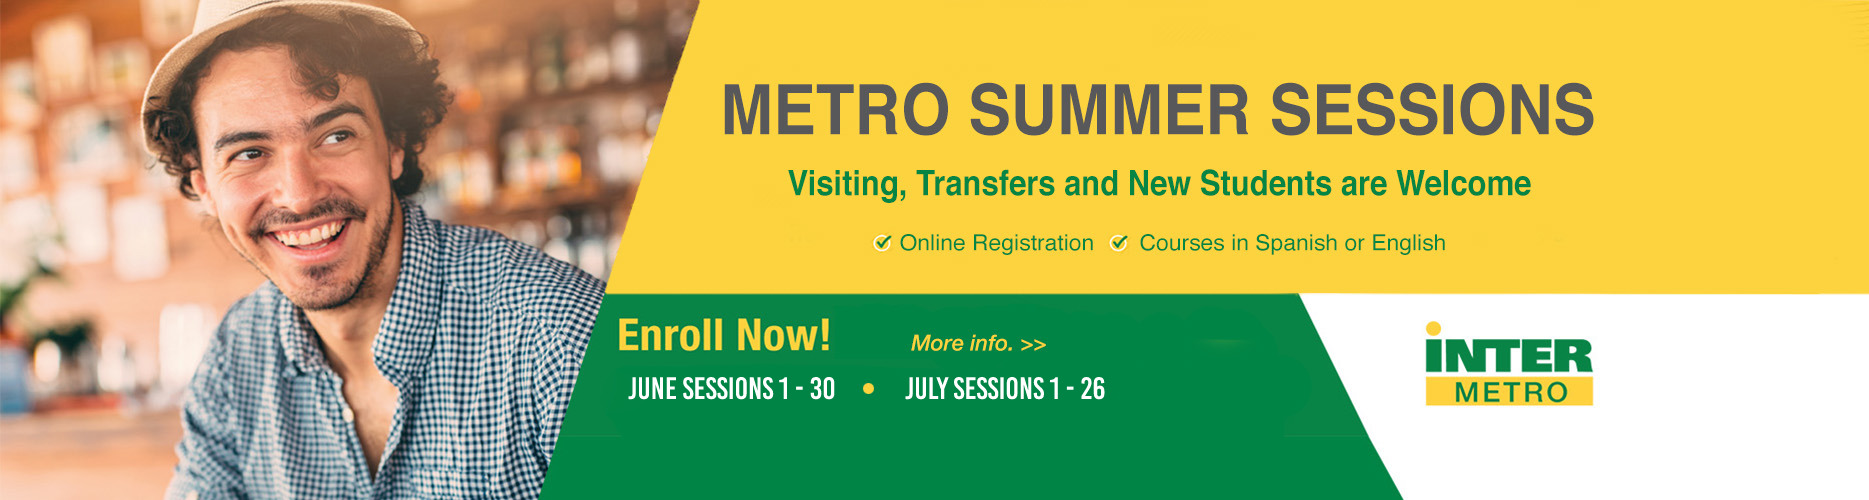 Metro Summer Sessions Promo